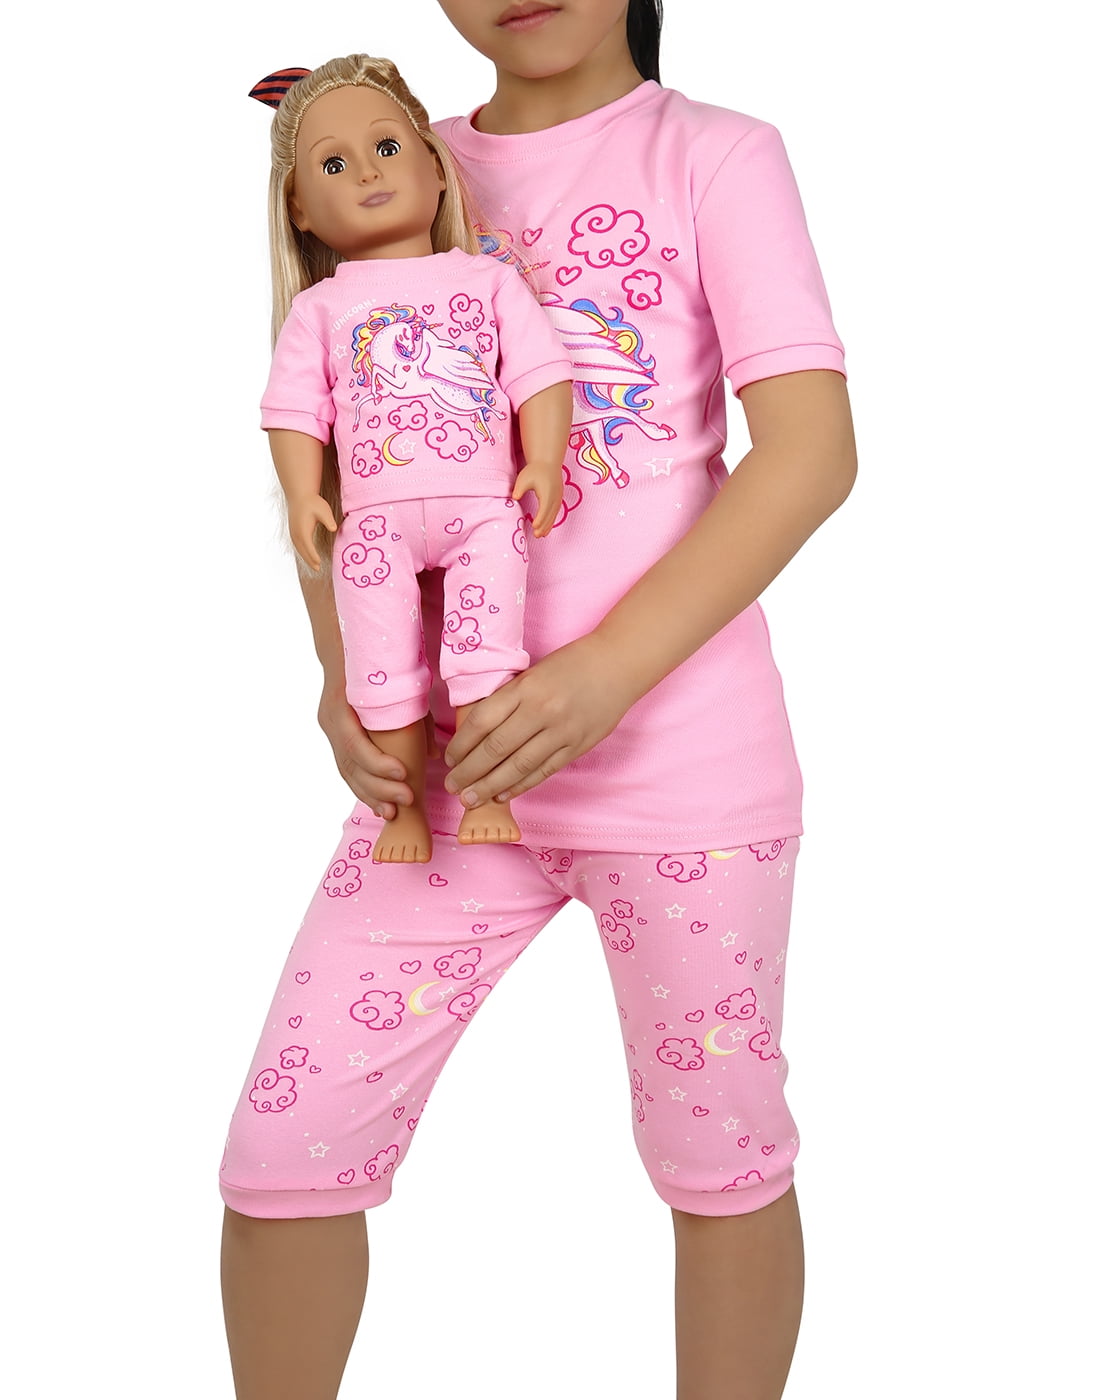 Pajamas for Girls Unicorn Pjs Sets Little Kids Cotton Sleepwear 